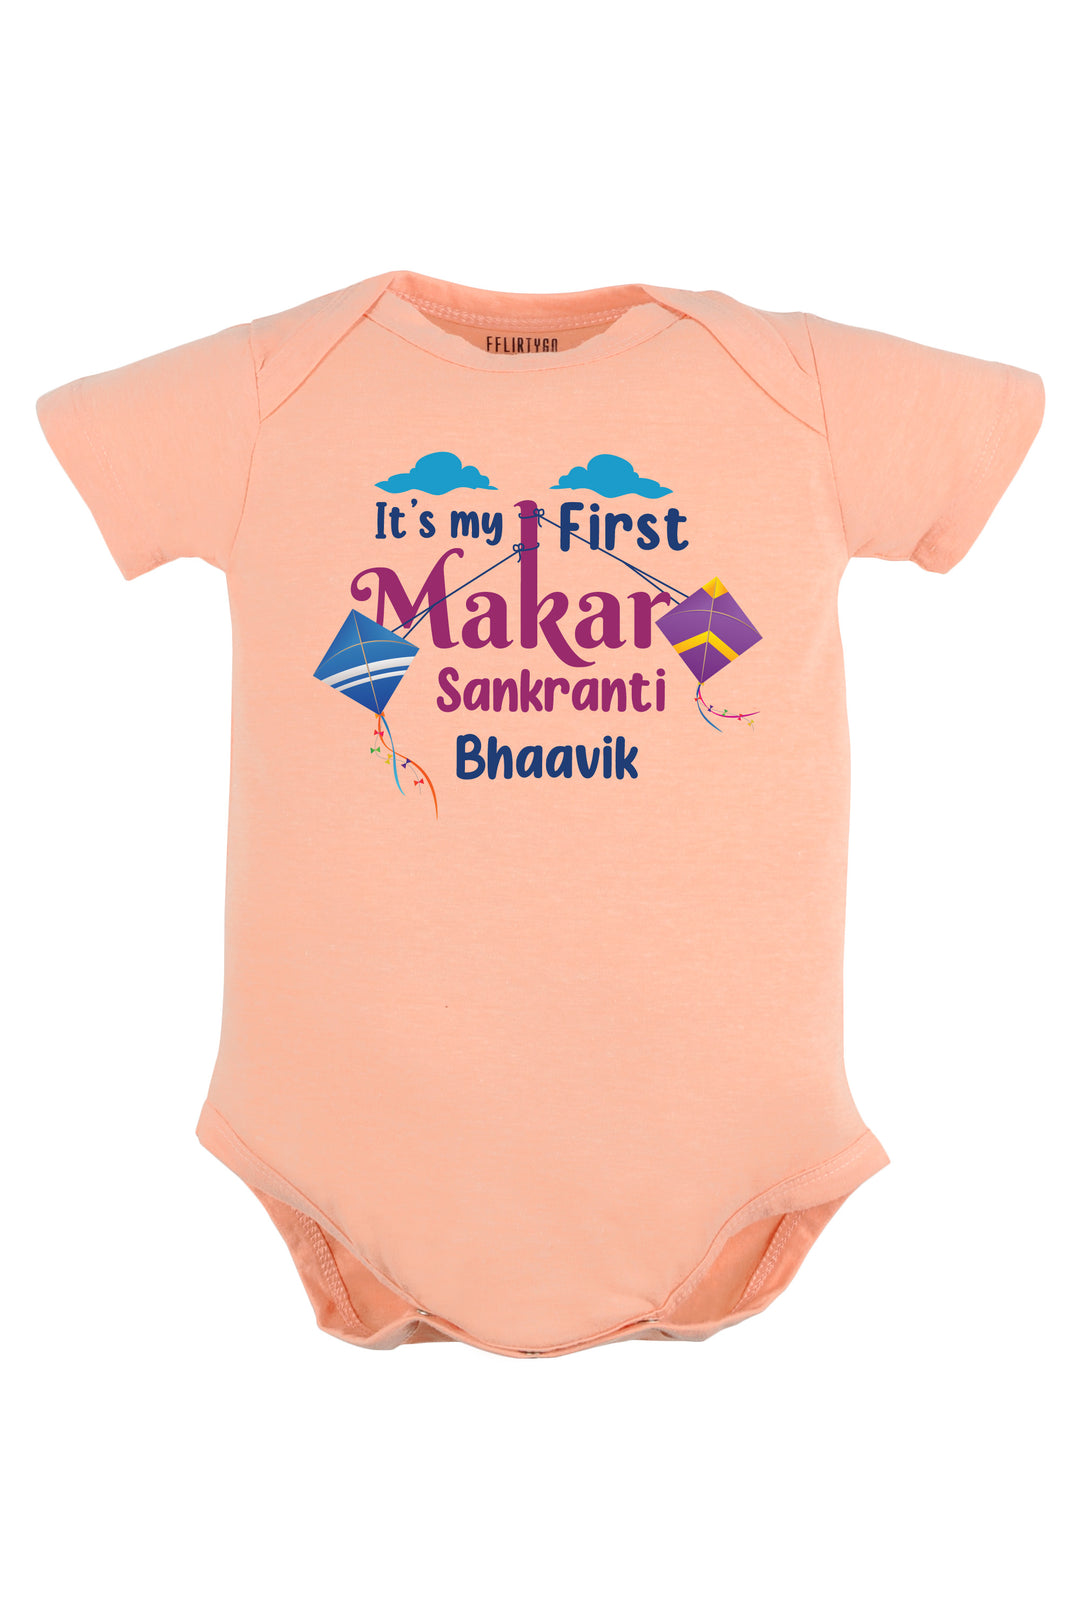 It's My First Makar Sankranti Baby Romper | Onesies w/ Custom Name